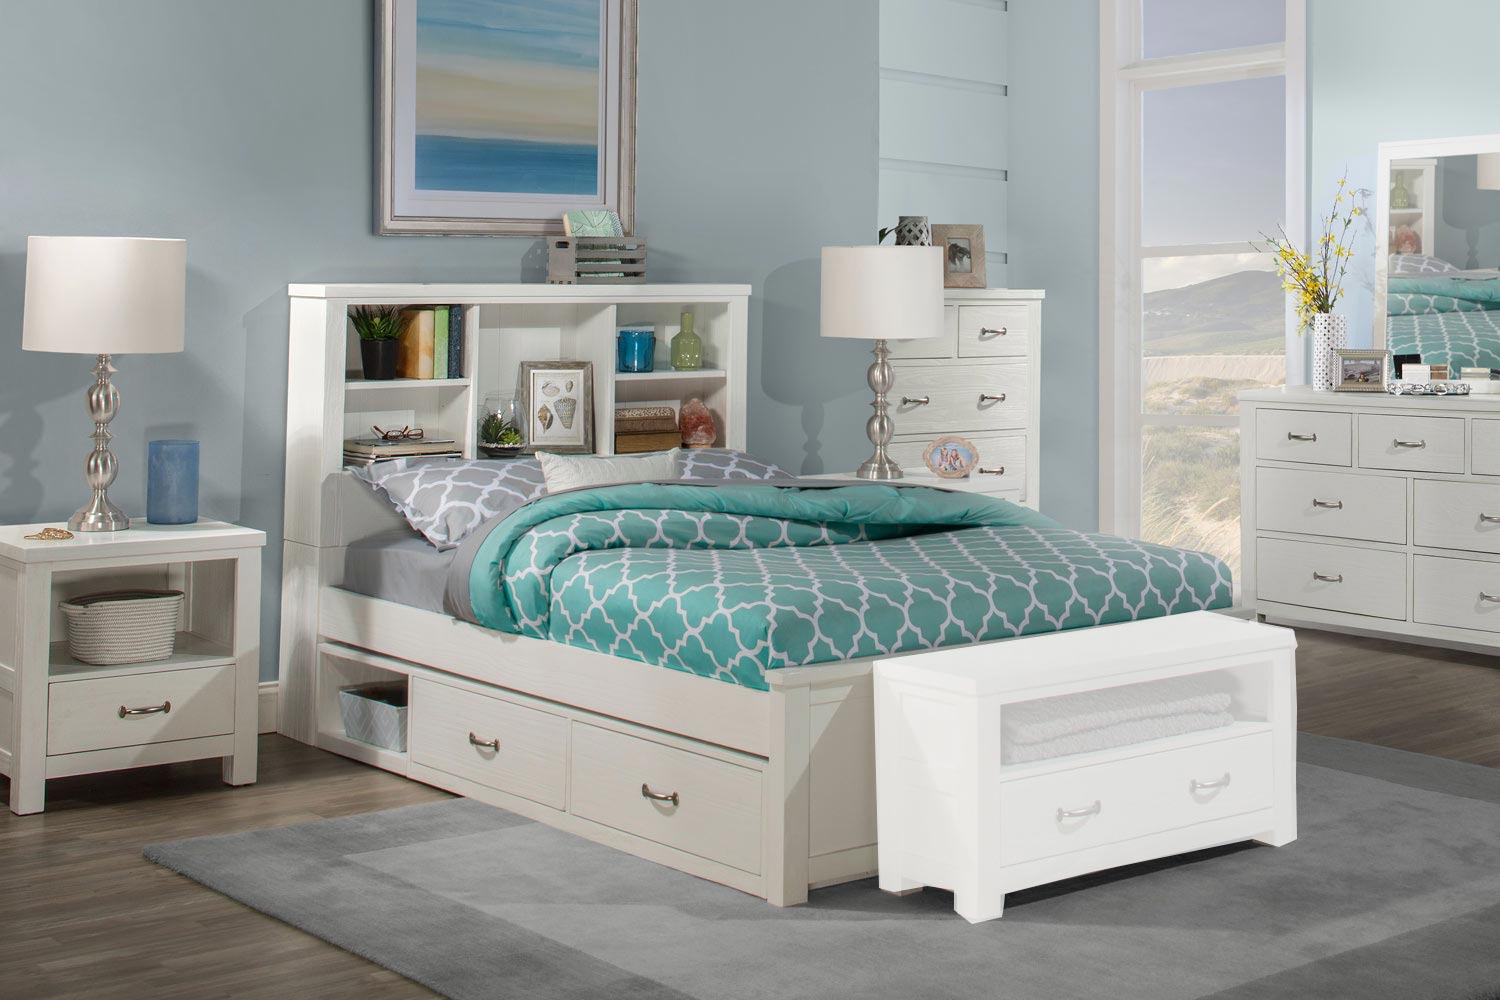 NE Kids Highlands Bookcase Bedroom Set with (2) Storage Units - White